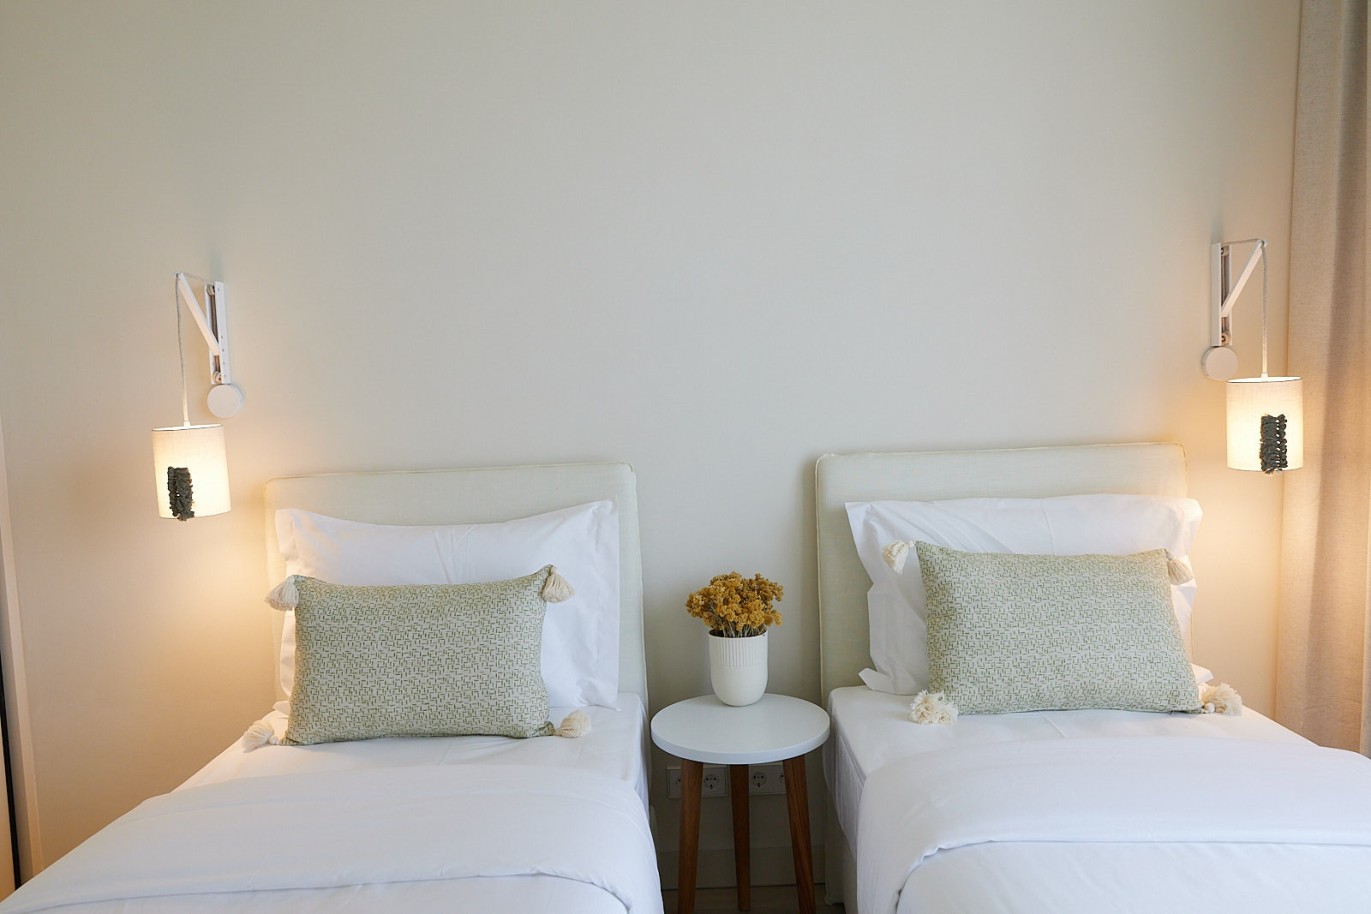 2 bedroom apartment in resort, for sale in Porches, Algarve_228841